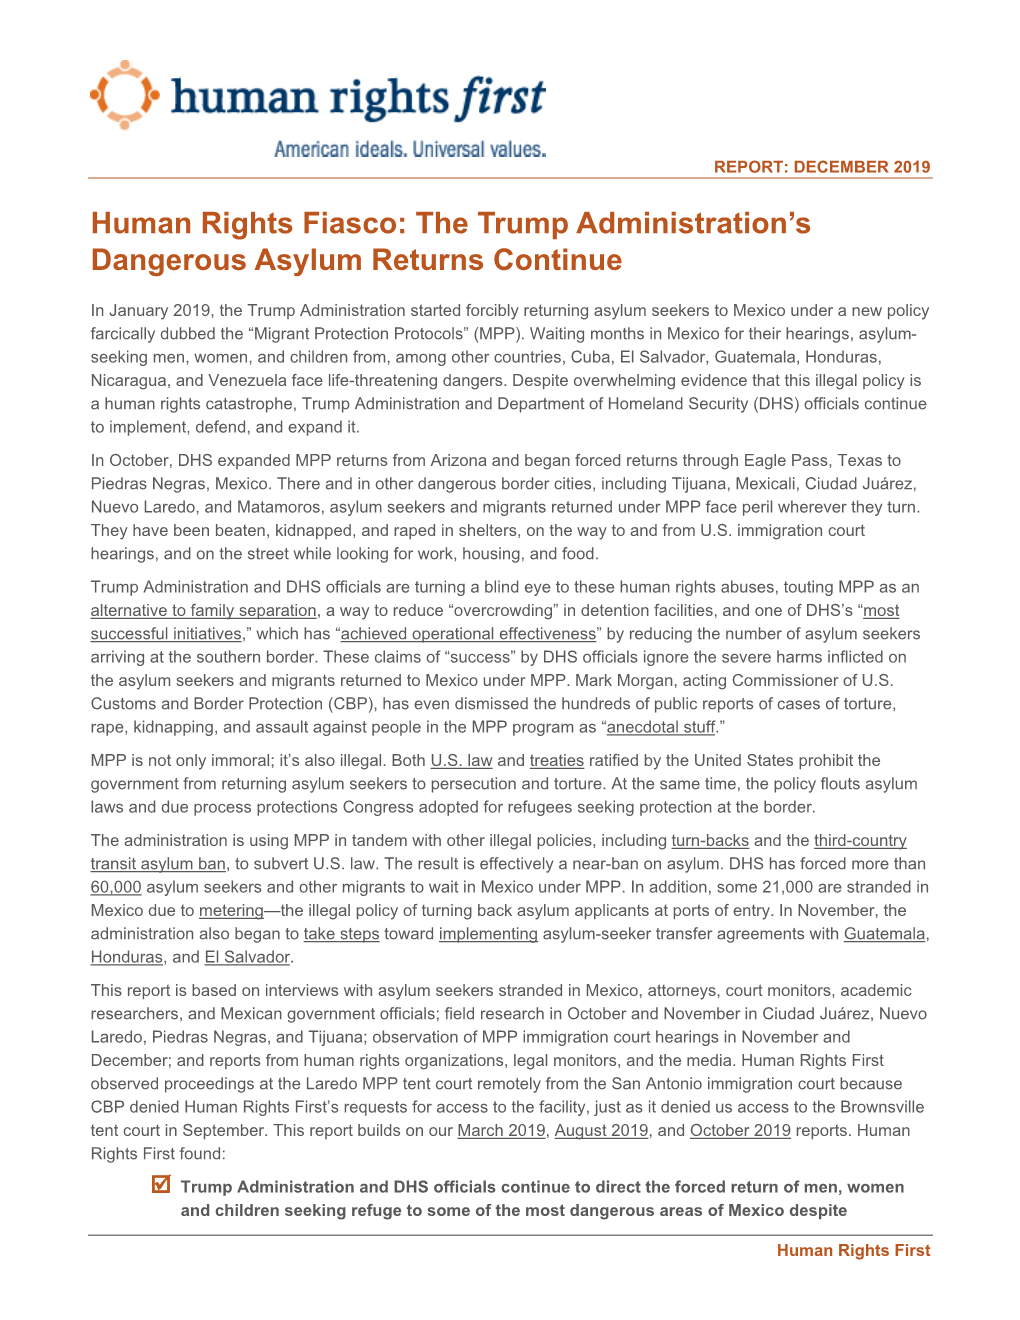 Human Rights Fiasco: the Trump Administration's Dangerous Asylum